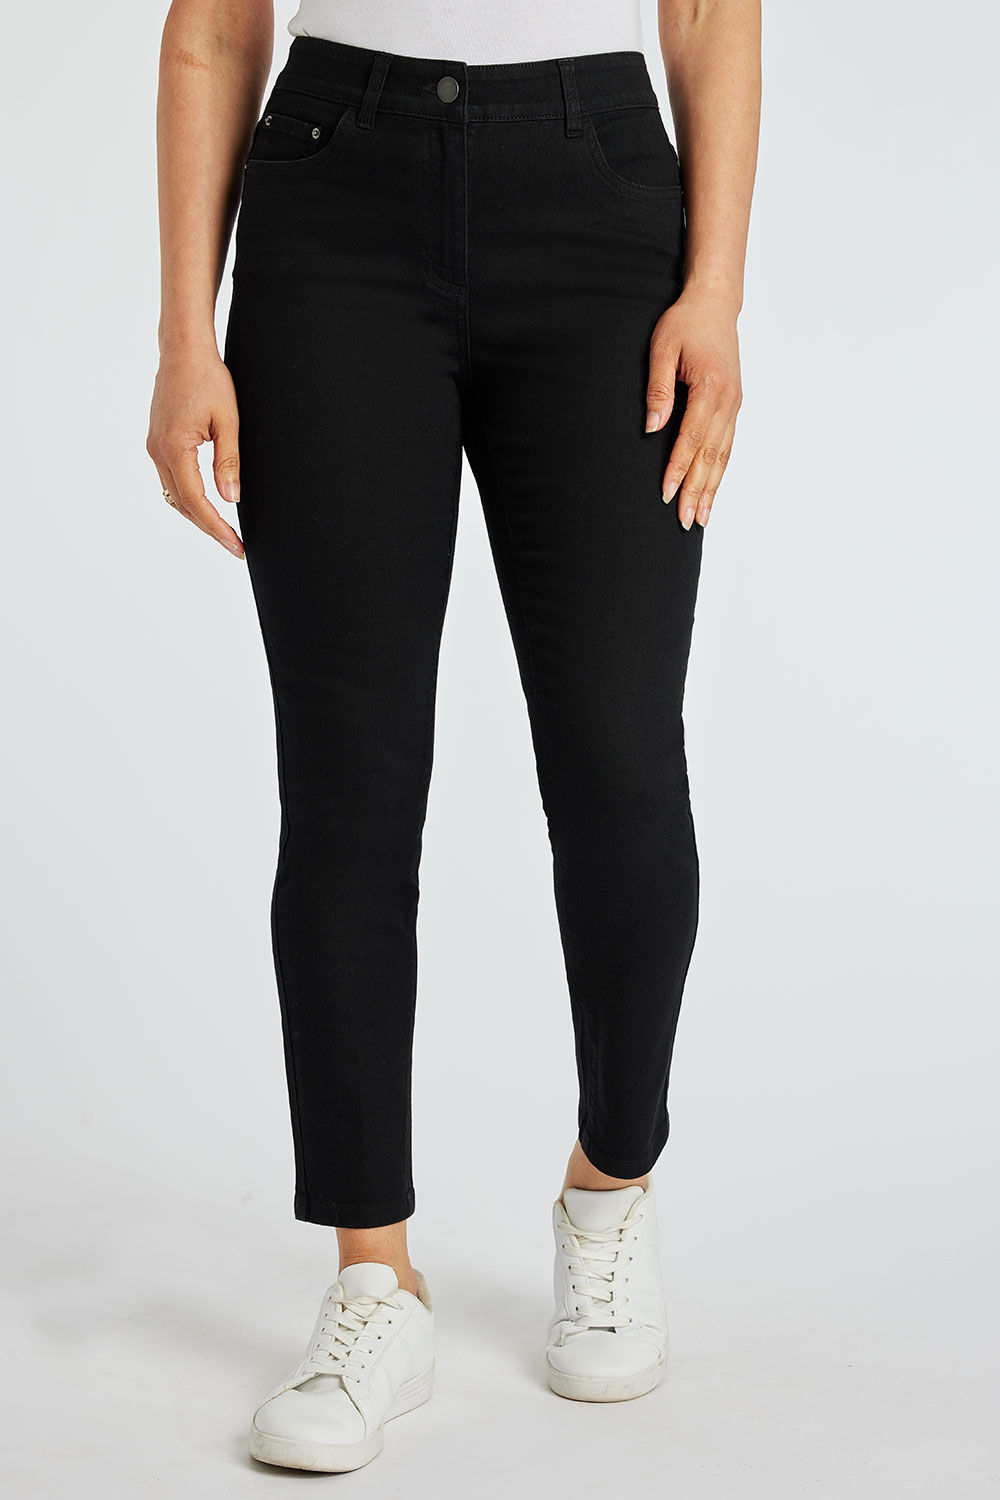 Bonmarche Women’s Black Cotton Casual The SUSIE Slim Leg Jeans, Size: 14